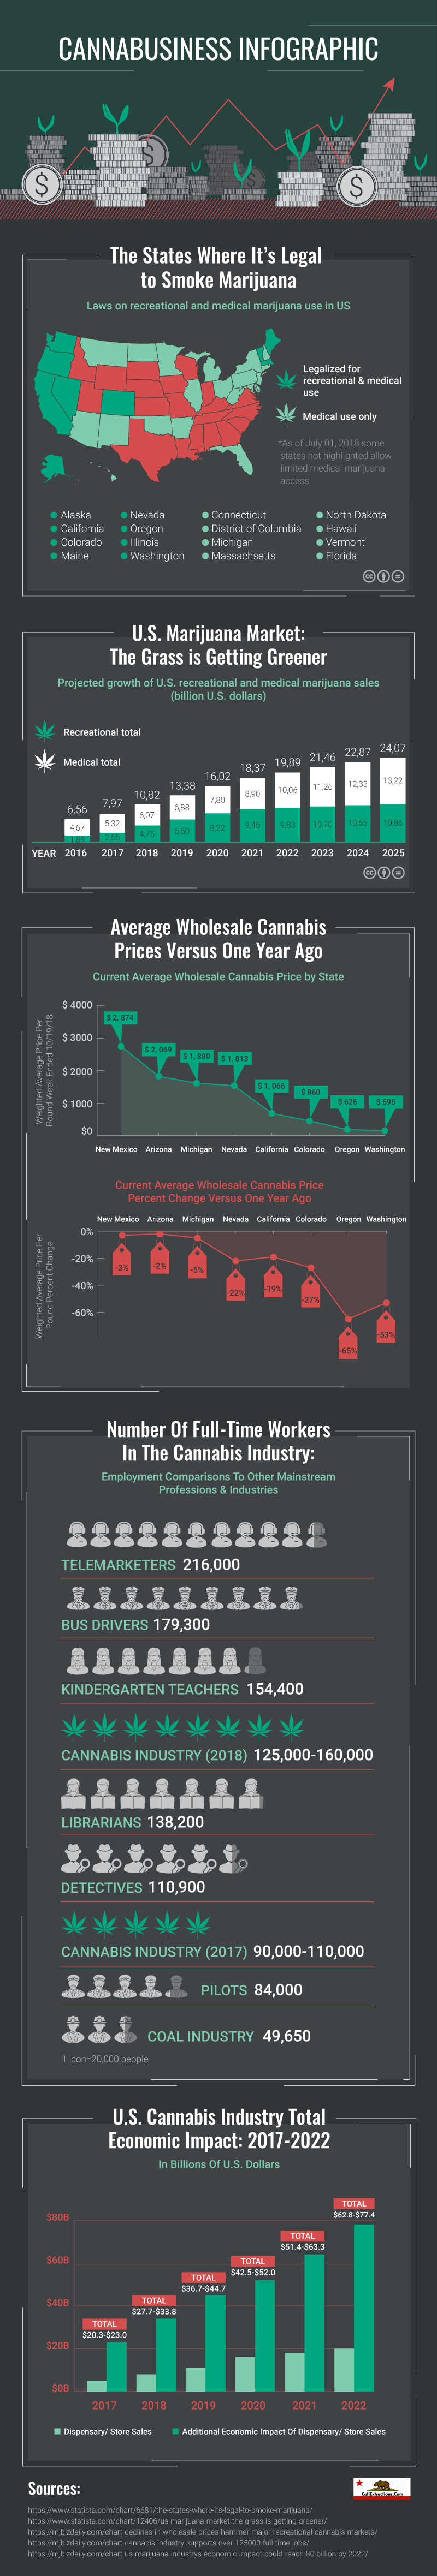 Cannabis Infographic Economics of Cannabis